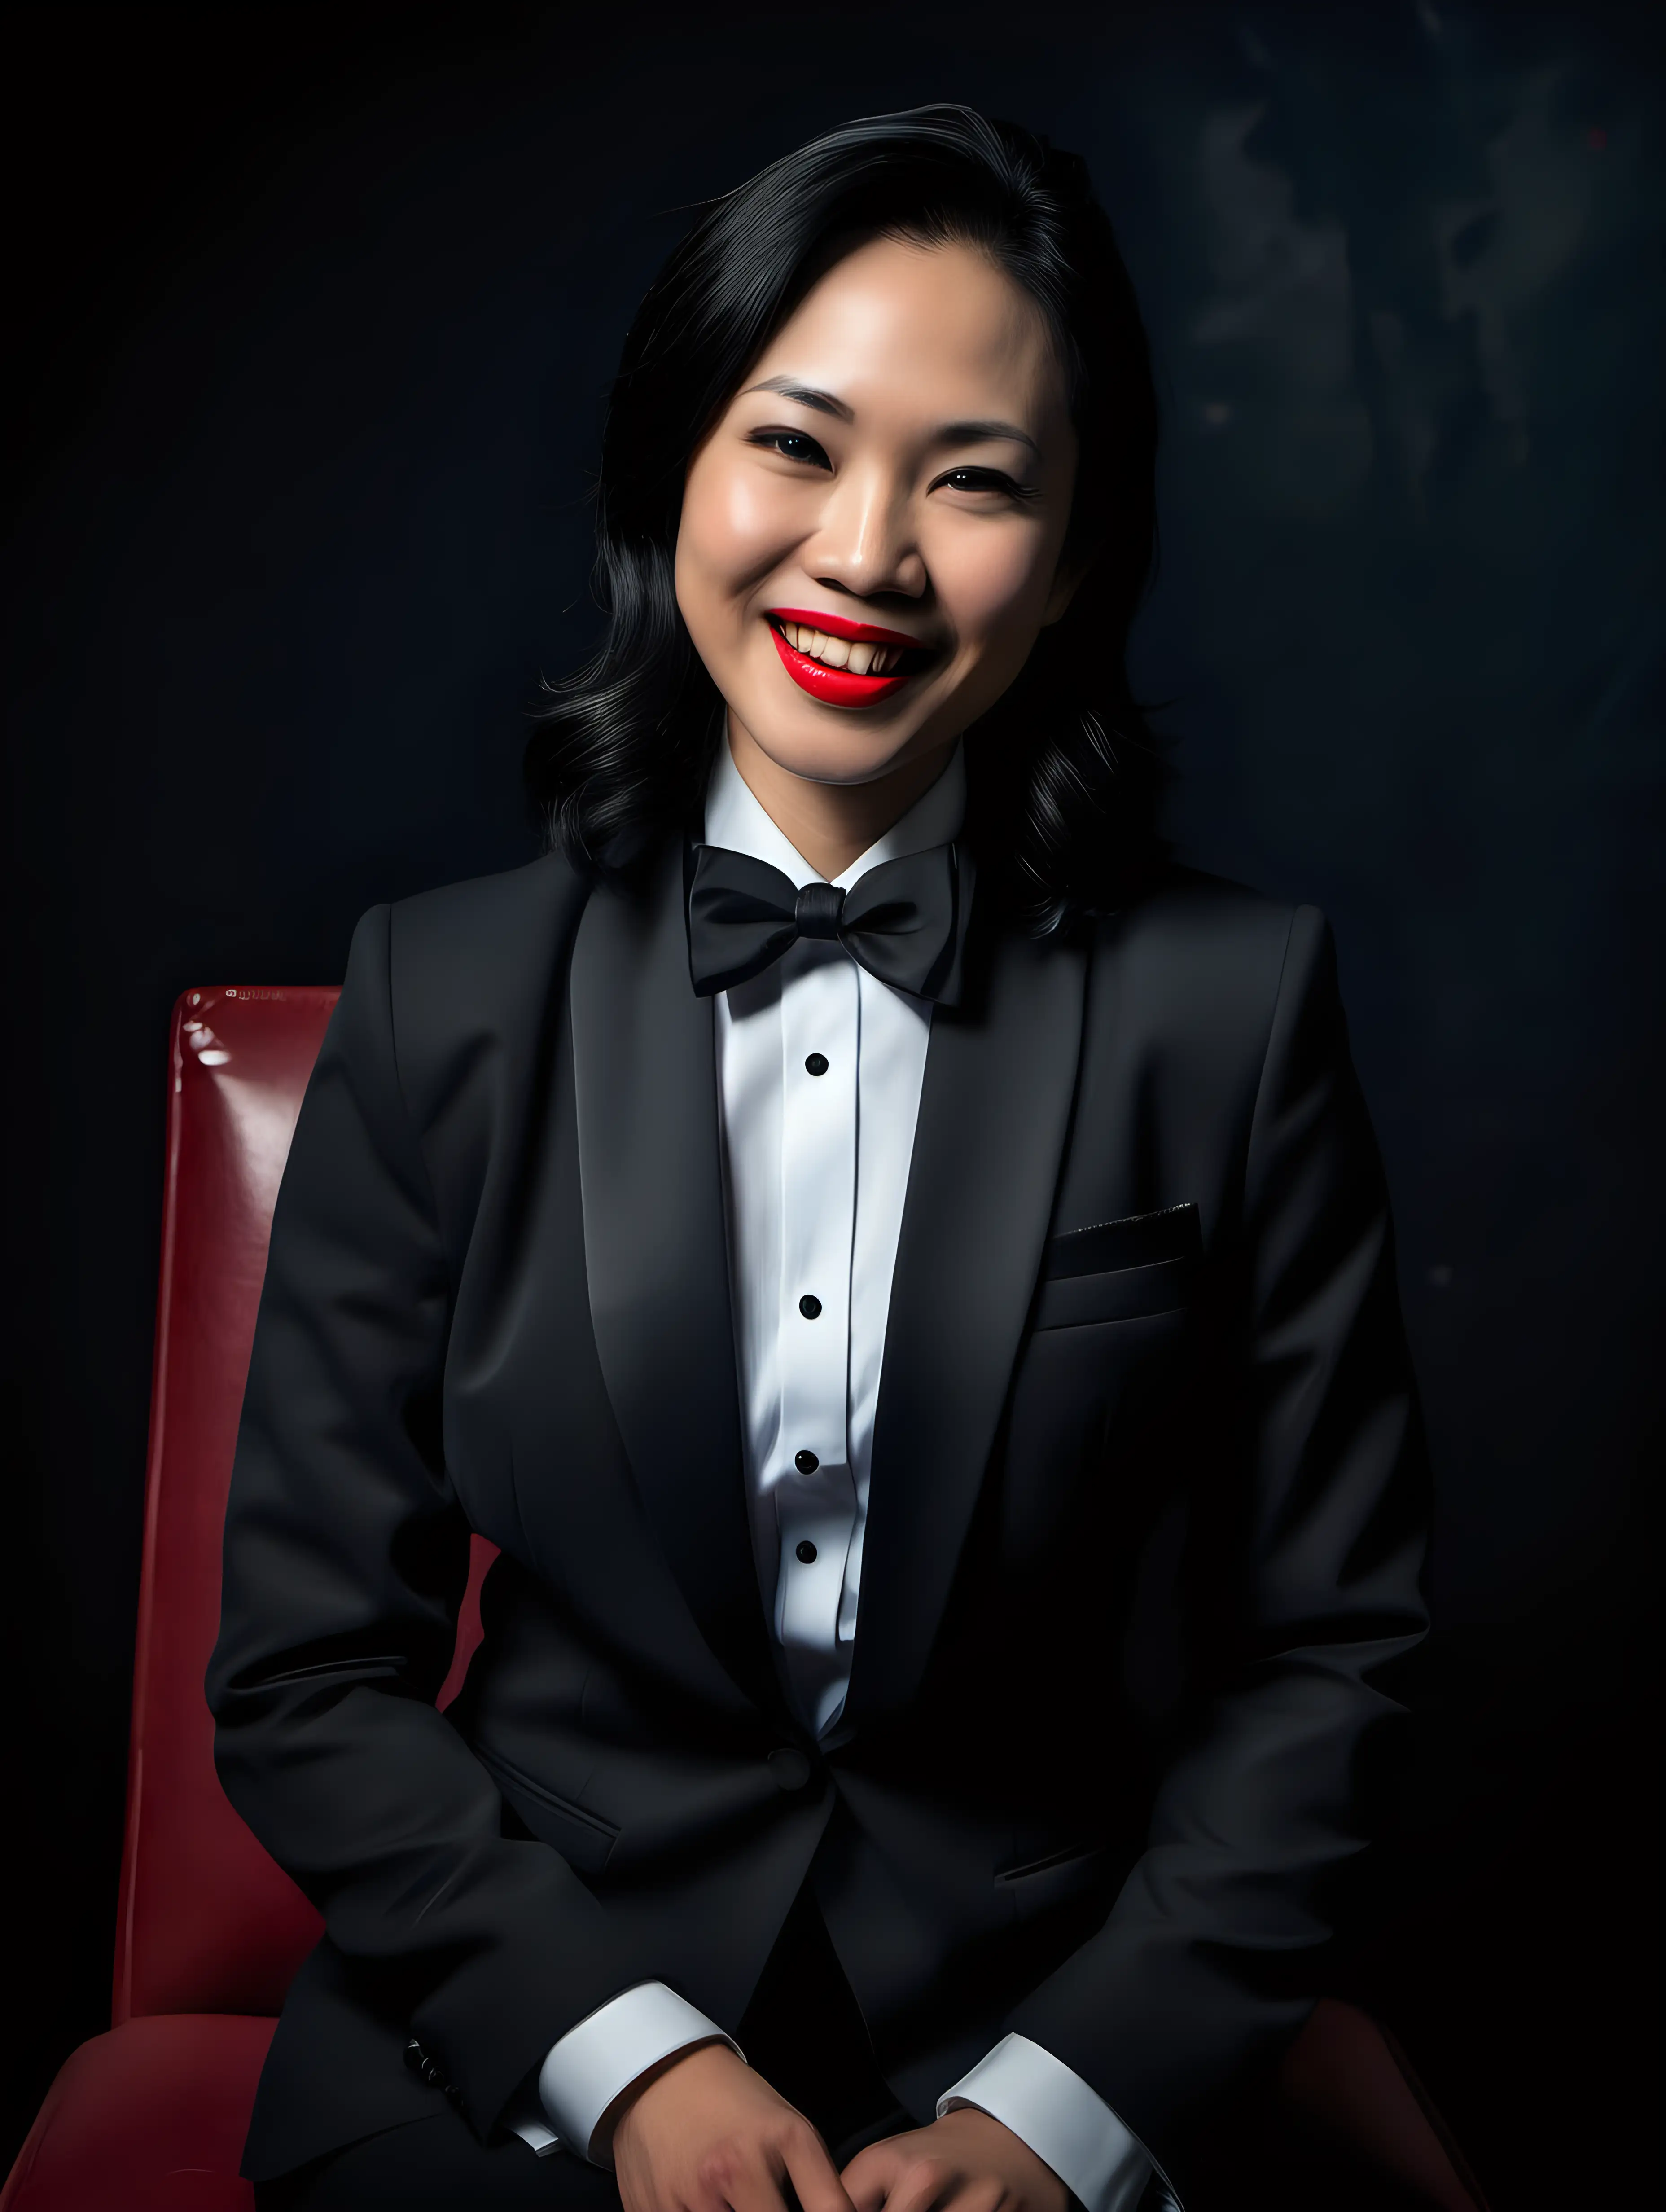 Joyful-Vietnamese-Woman-in-Tuxedo-Smiling-in-Dark-Room